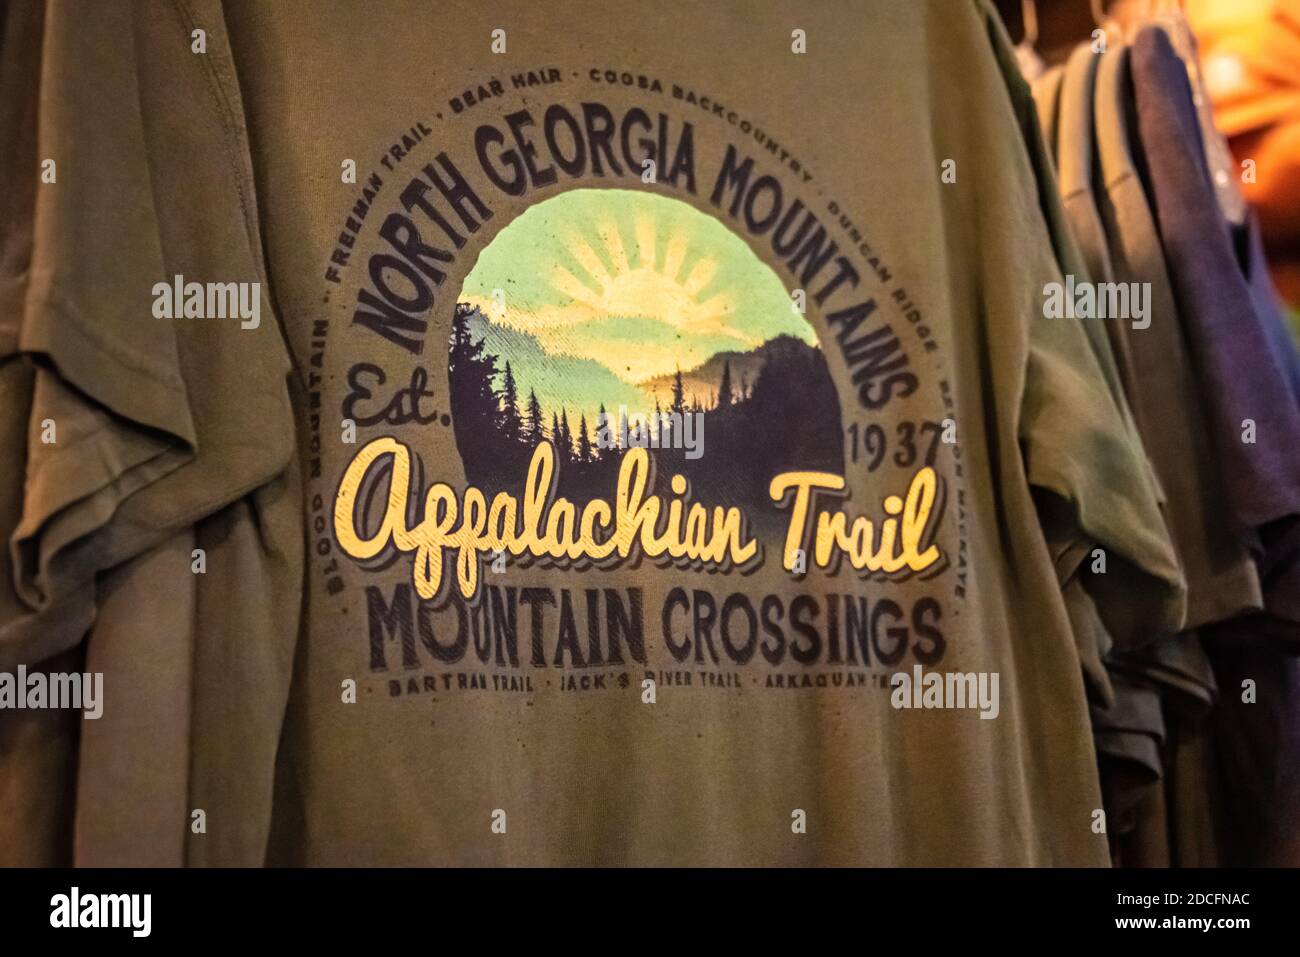 Appalachian Trail / North Georgia Mountains camisetas en Mountain Crossings en el Appalachian Trail en Neels Gap en Blairsville, Georgia. (EE.UU.) Foto de stock